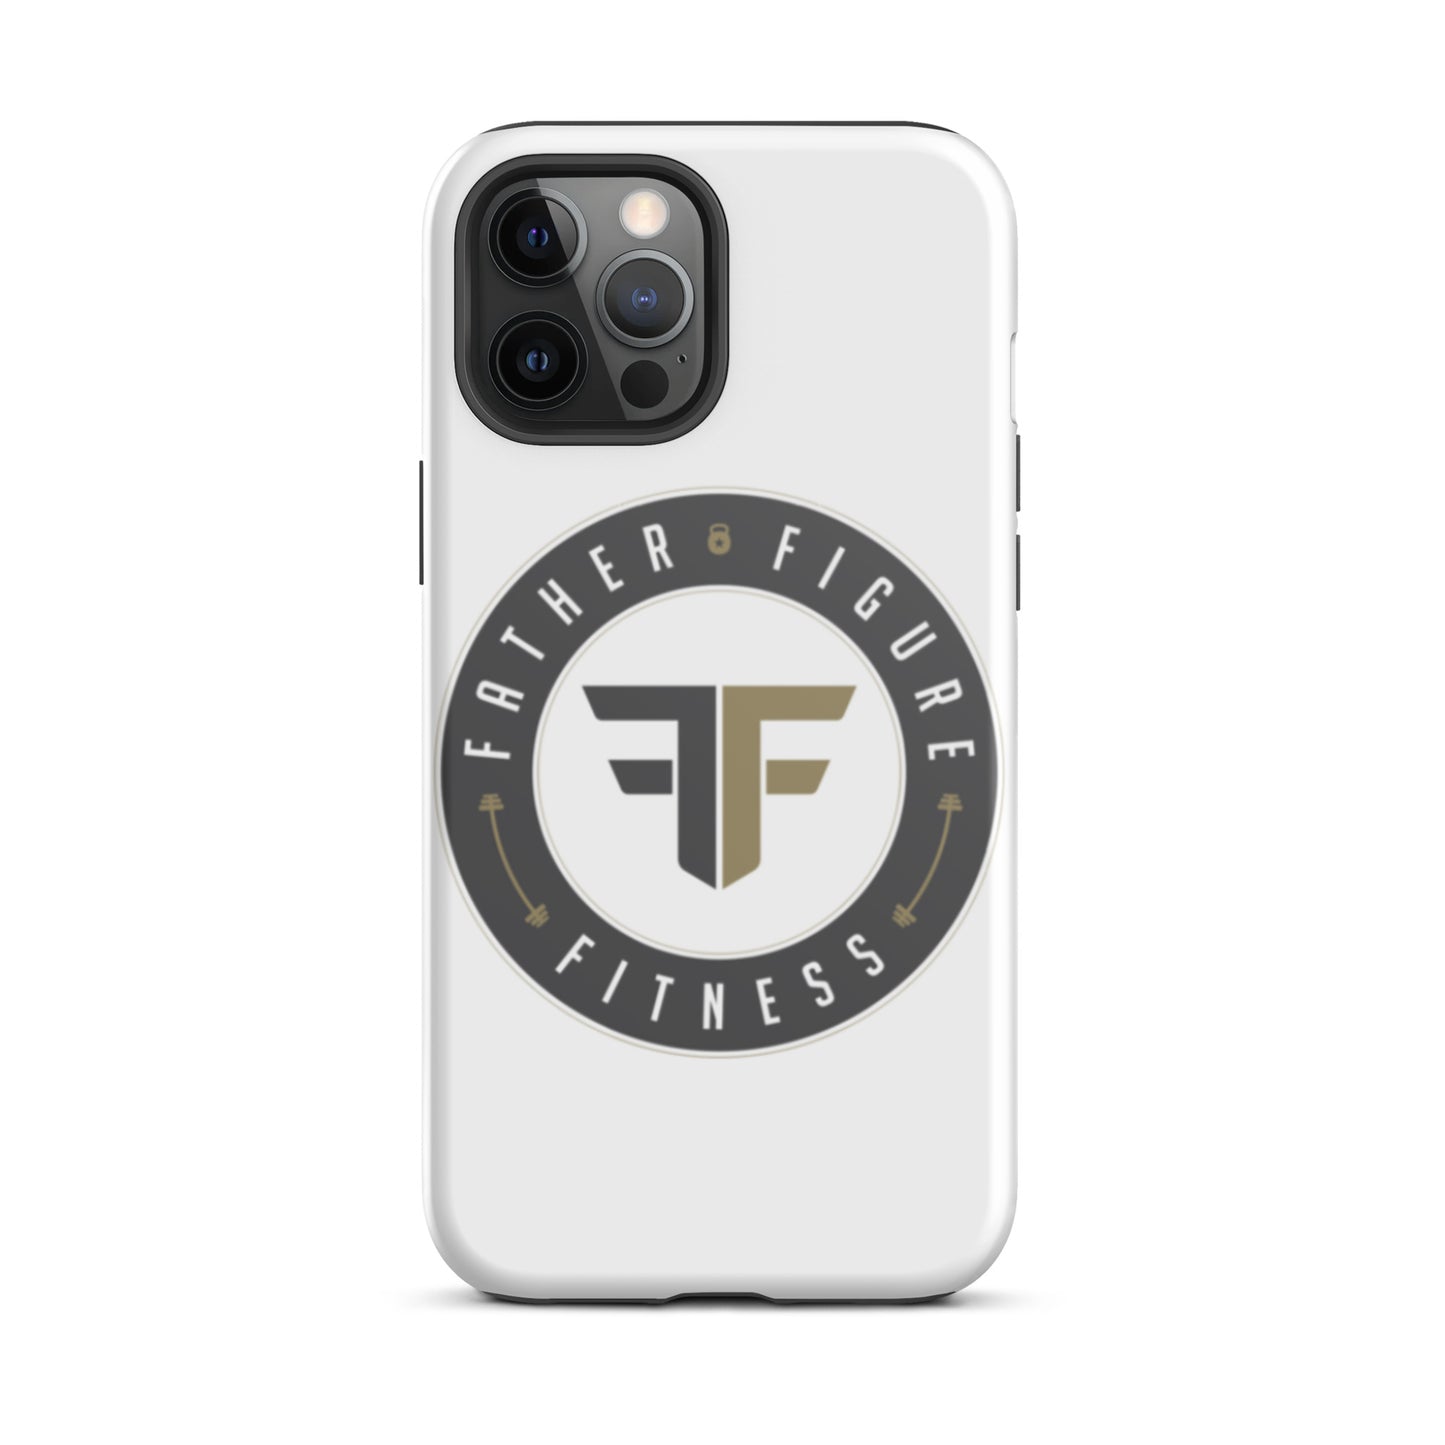 FF Tough iPhone case